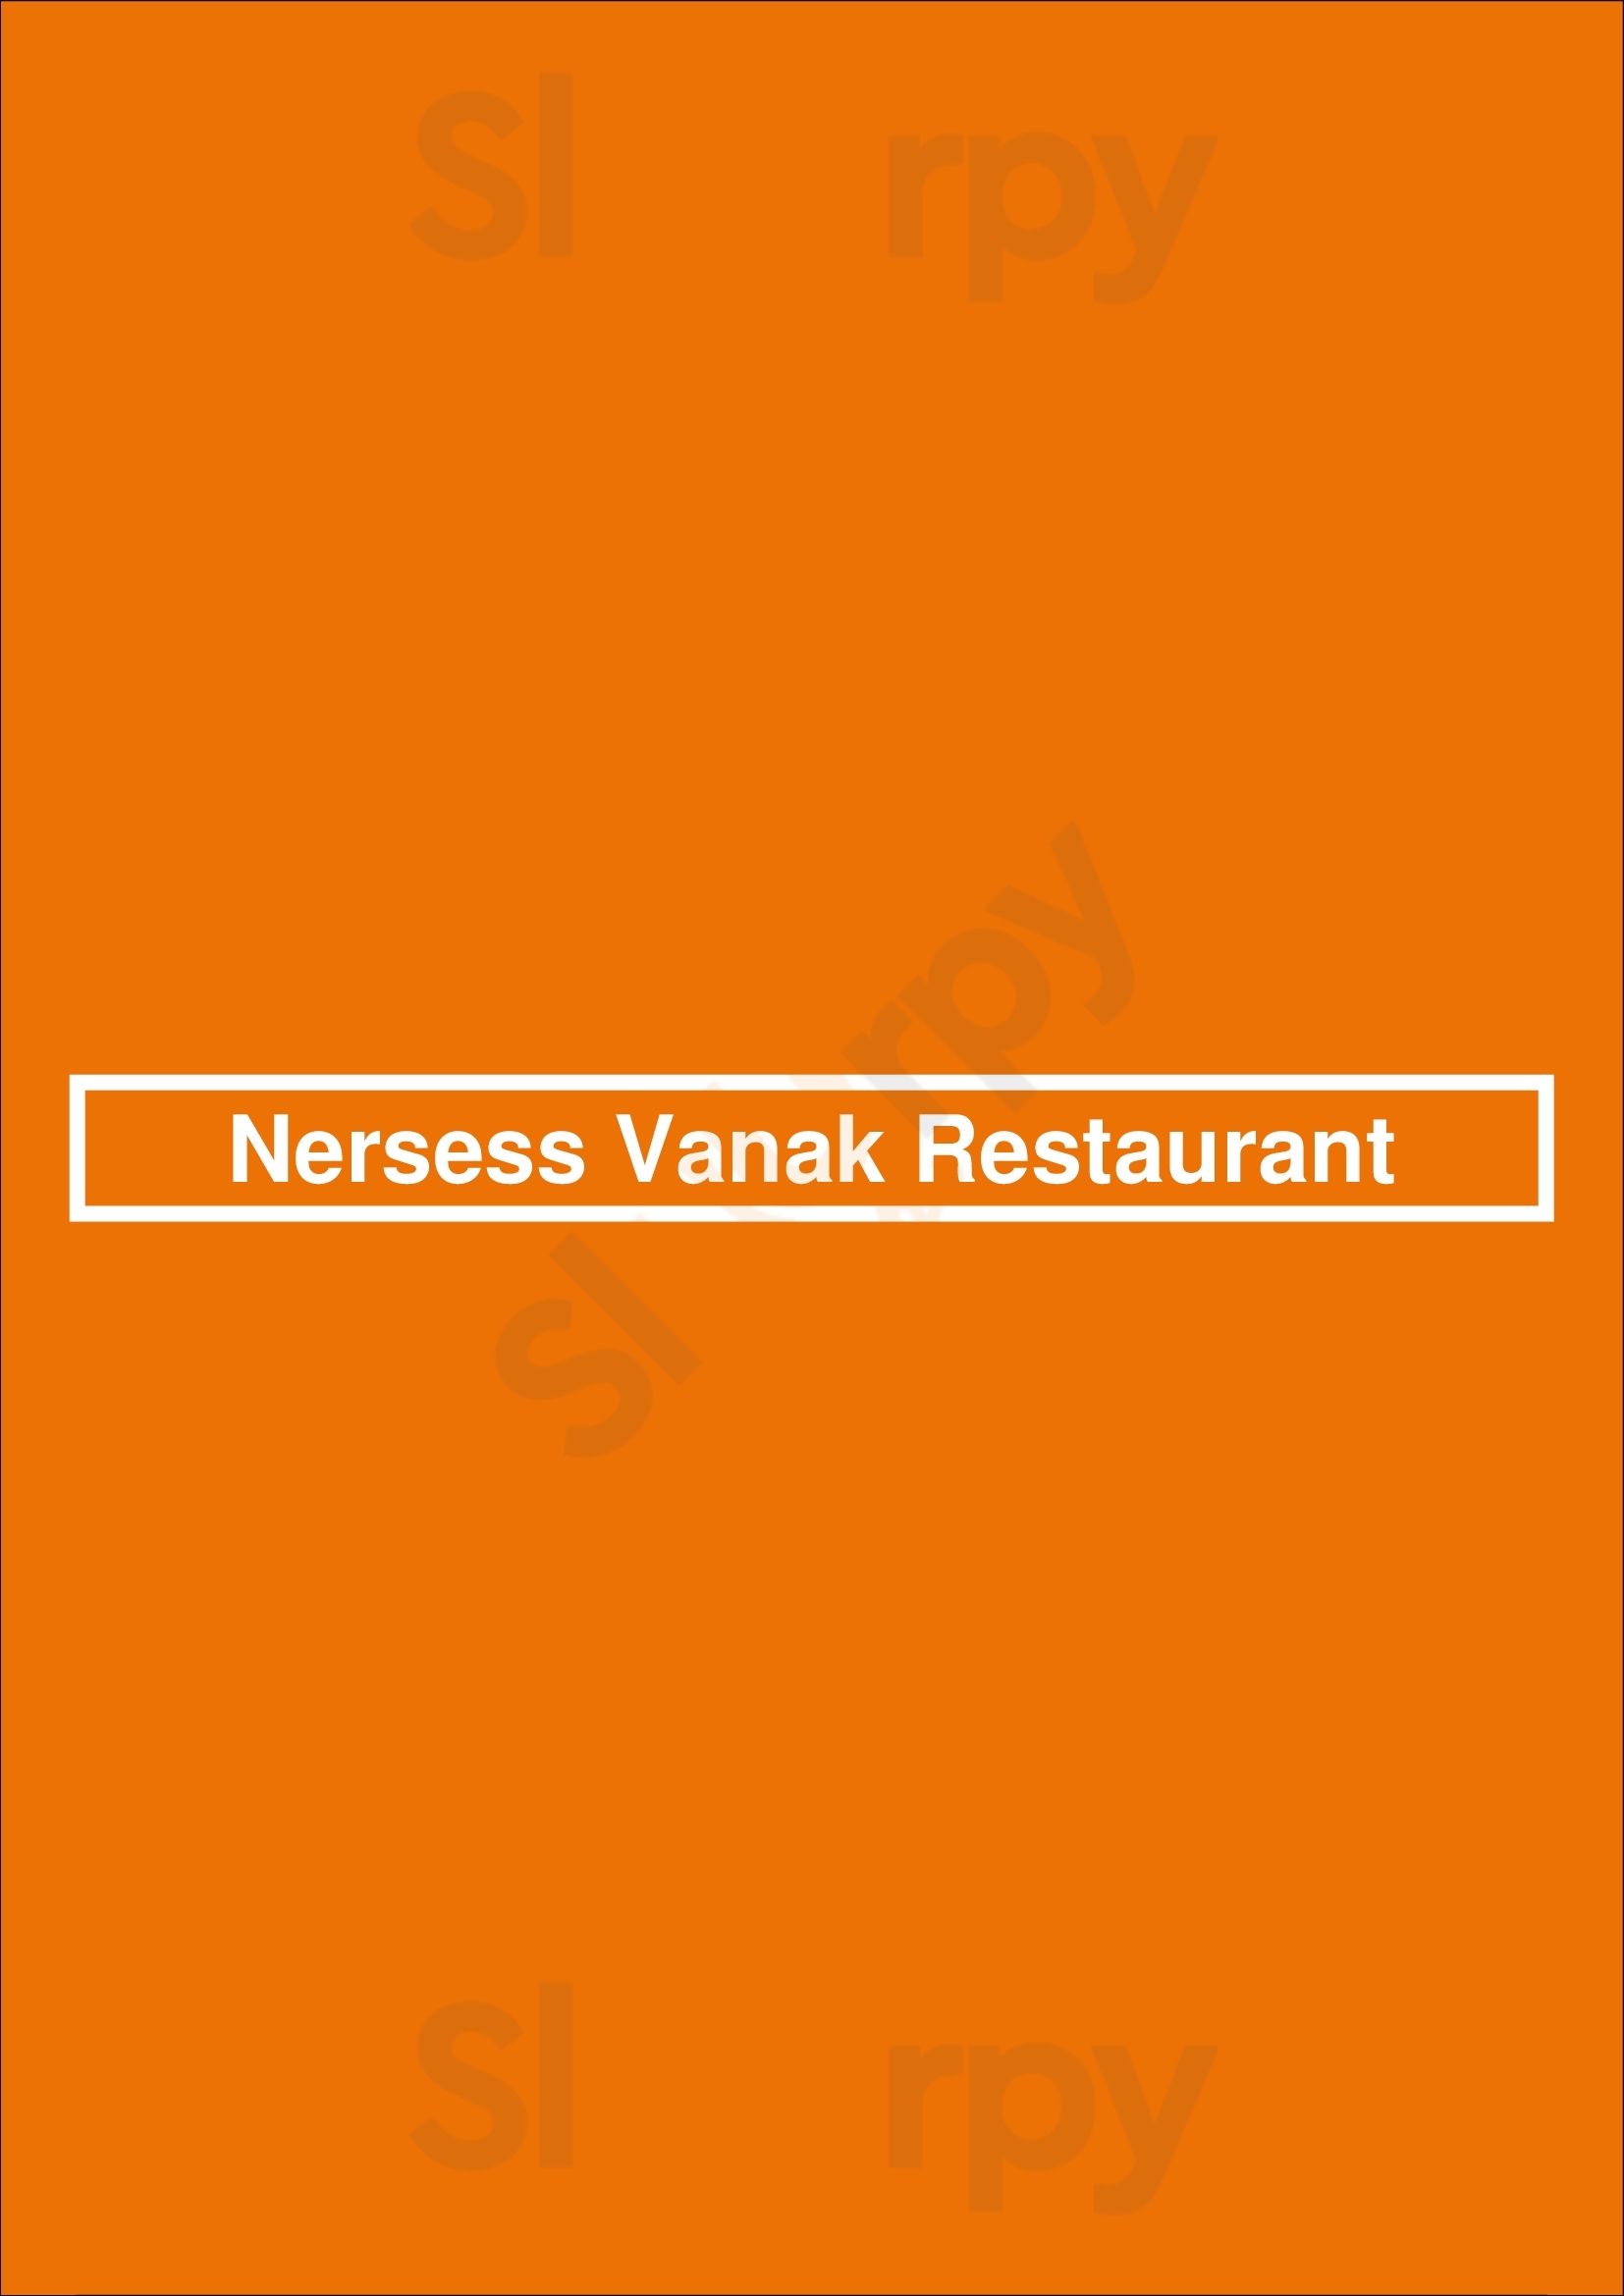 Nersess Vanak Restaurant Glendale Menu - 1